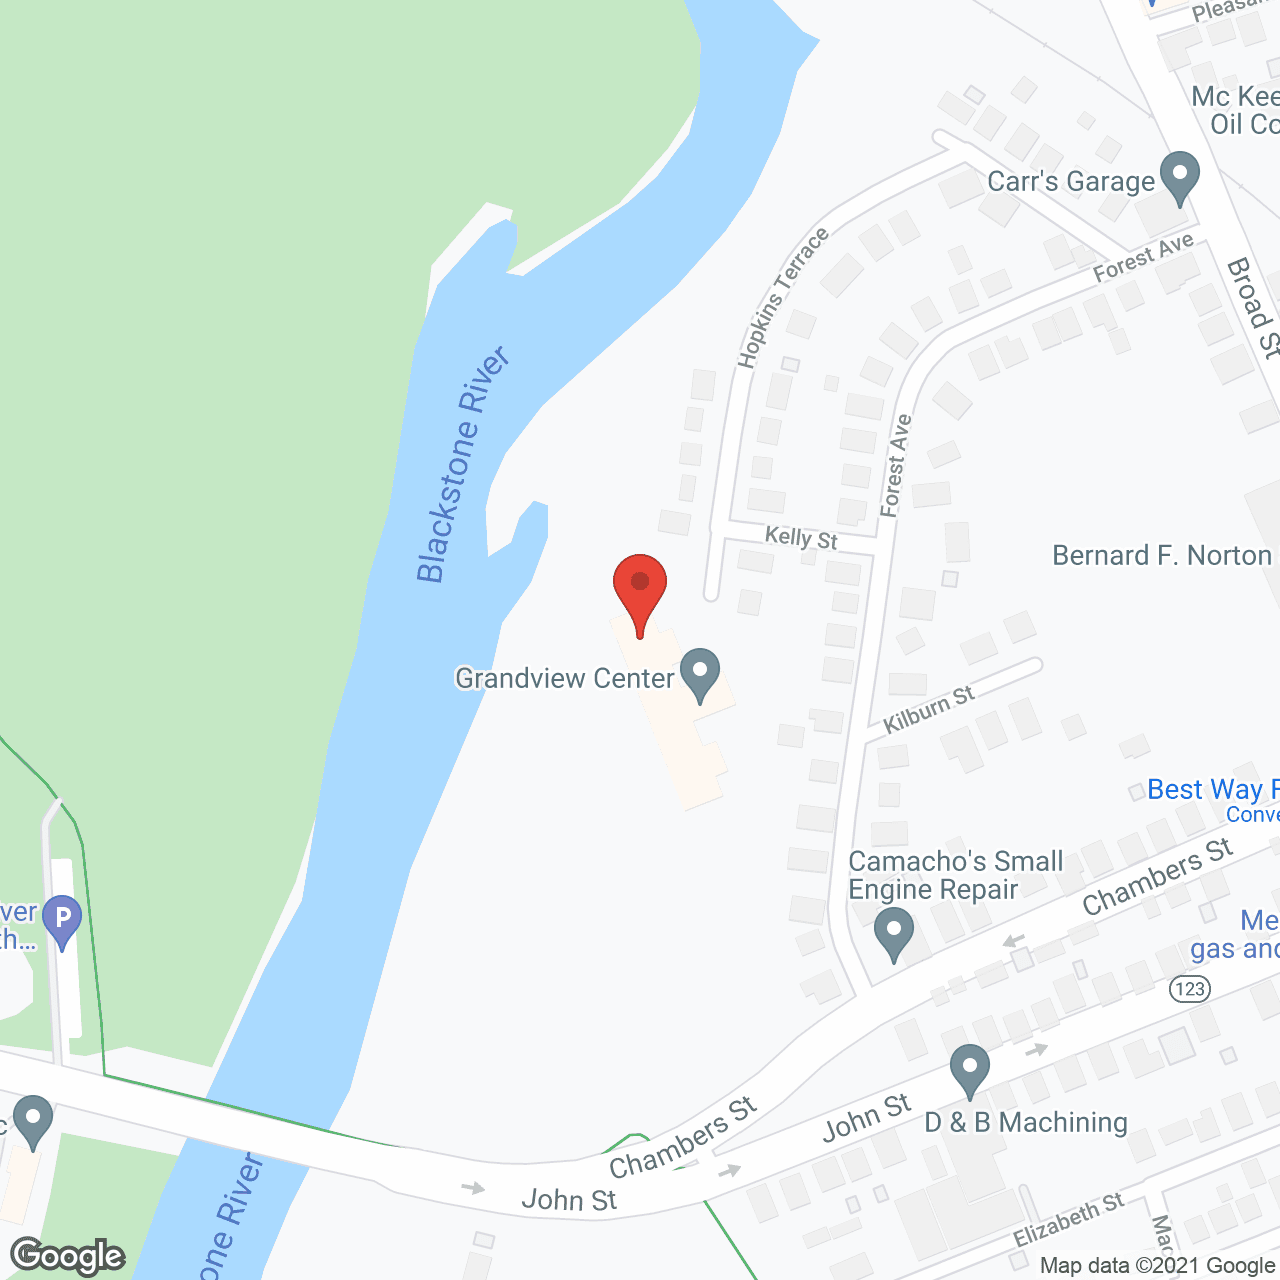 Grandview Center in google map